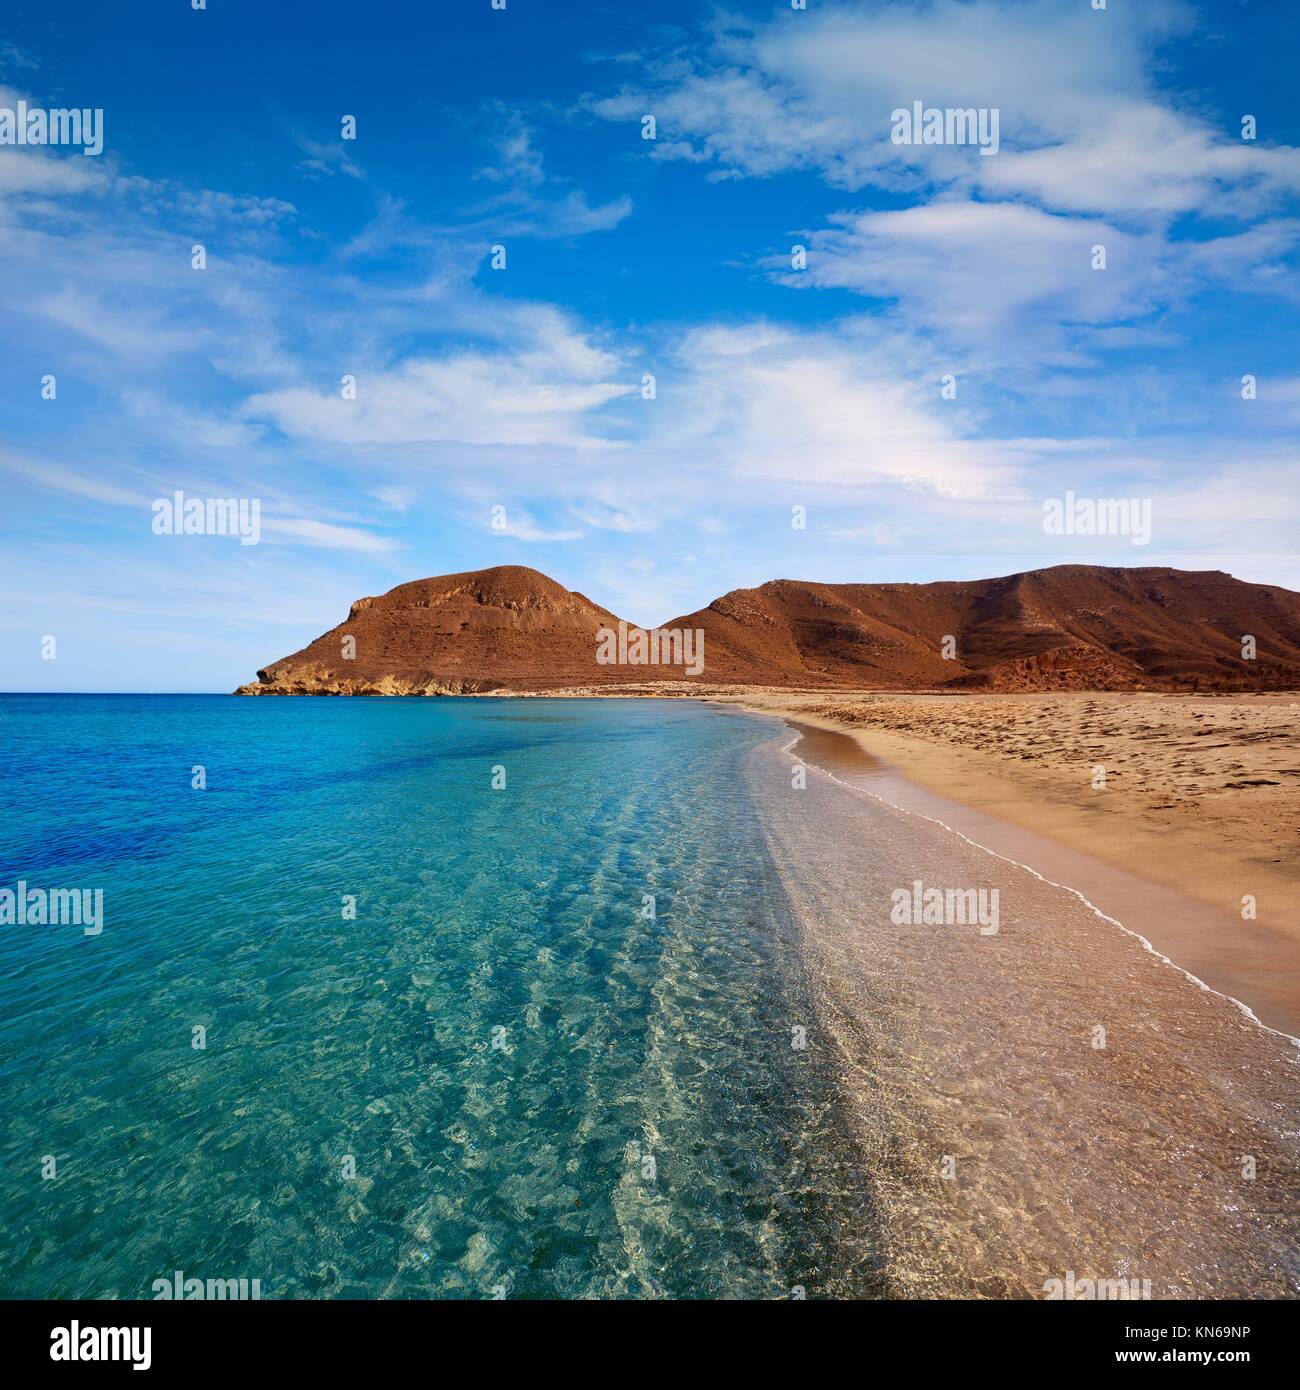 Almeria In Cabo De Gata Playazo Rodalquilar Beach At Mediterranean Spain Stock Photo Alamy